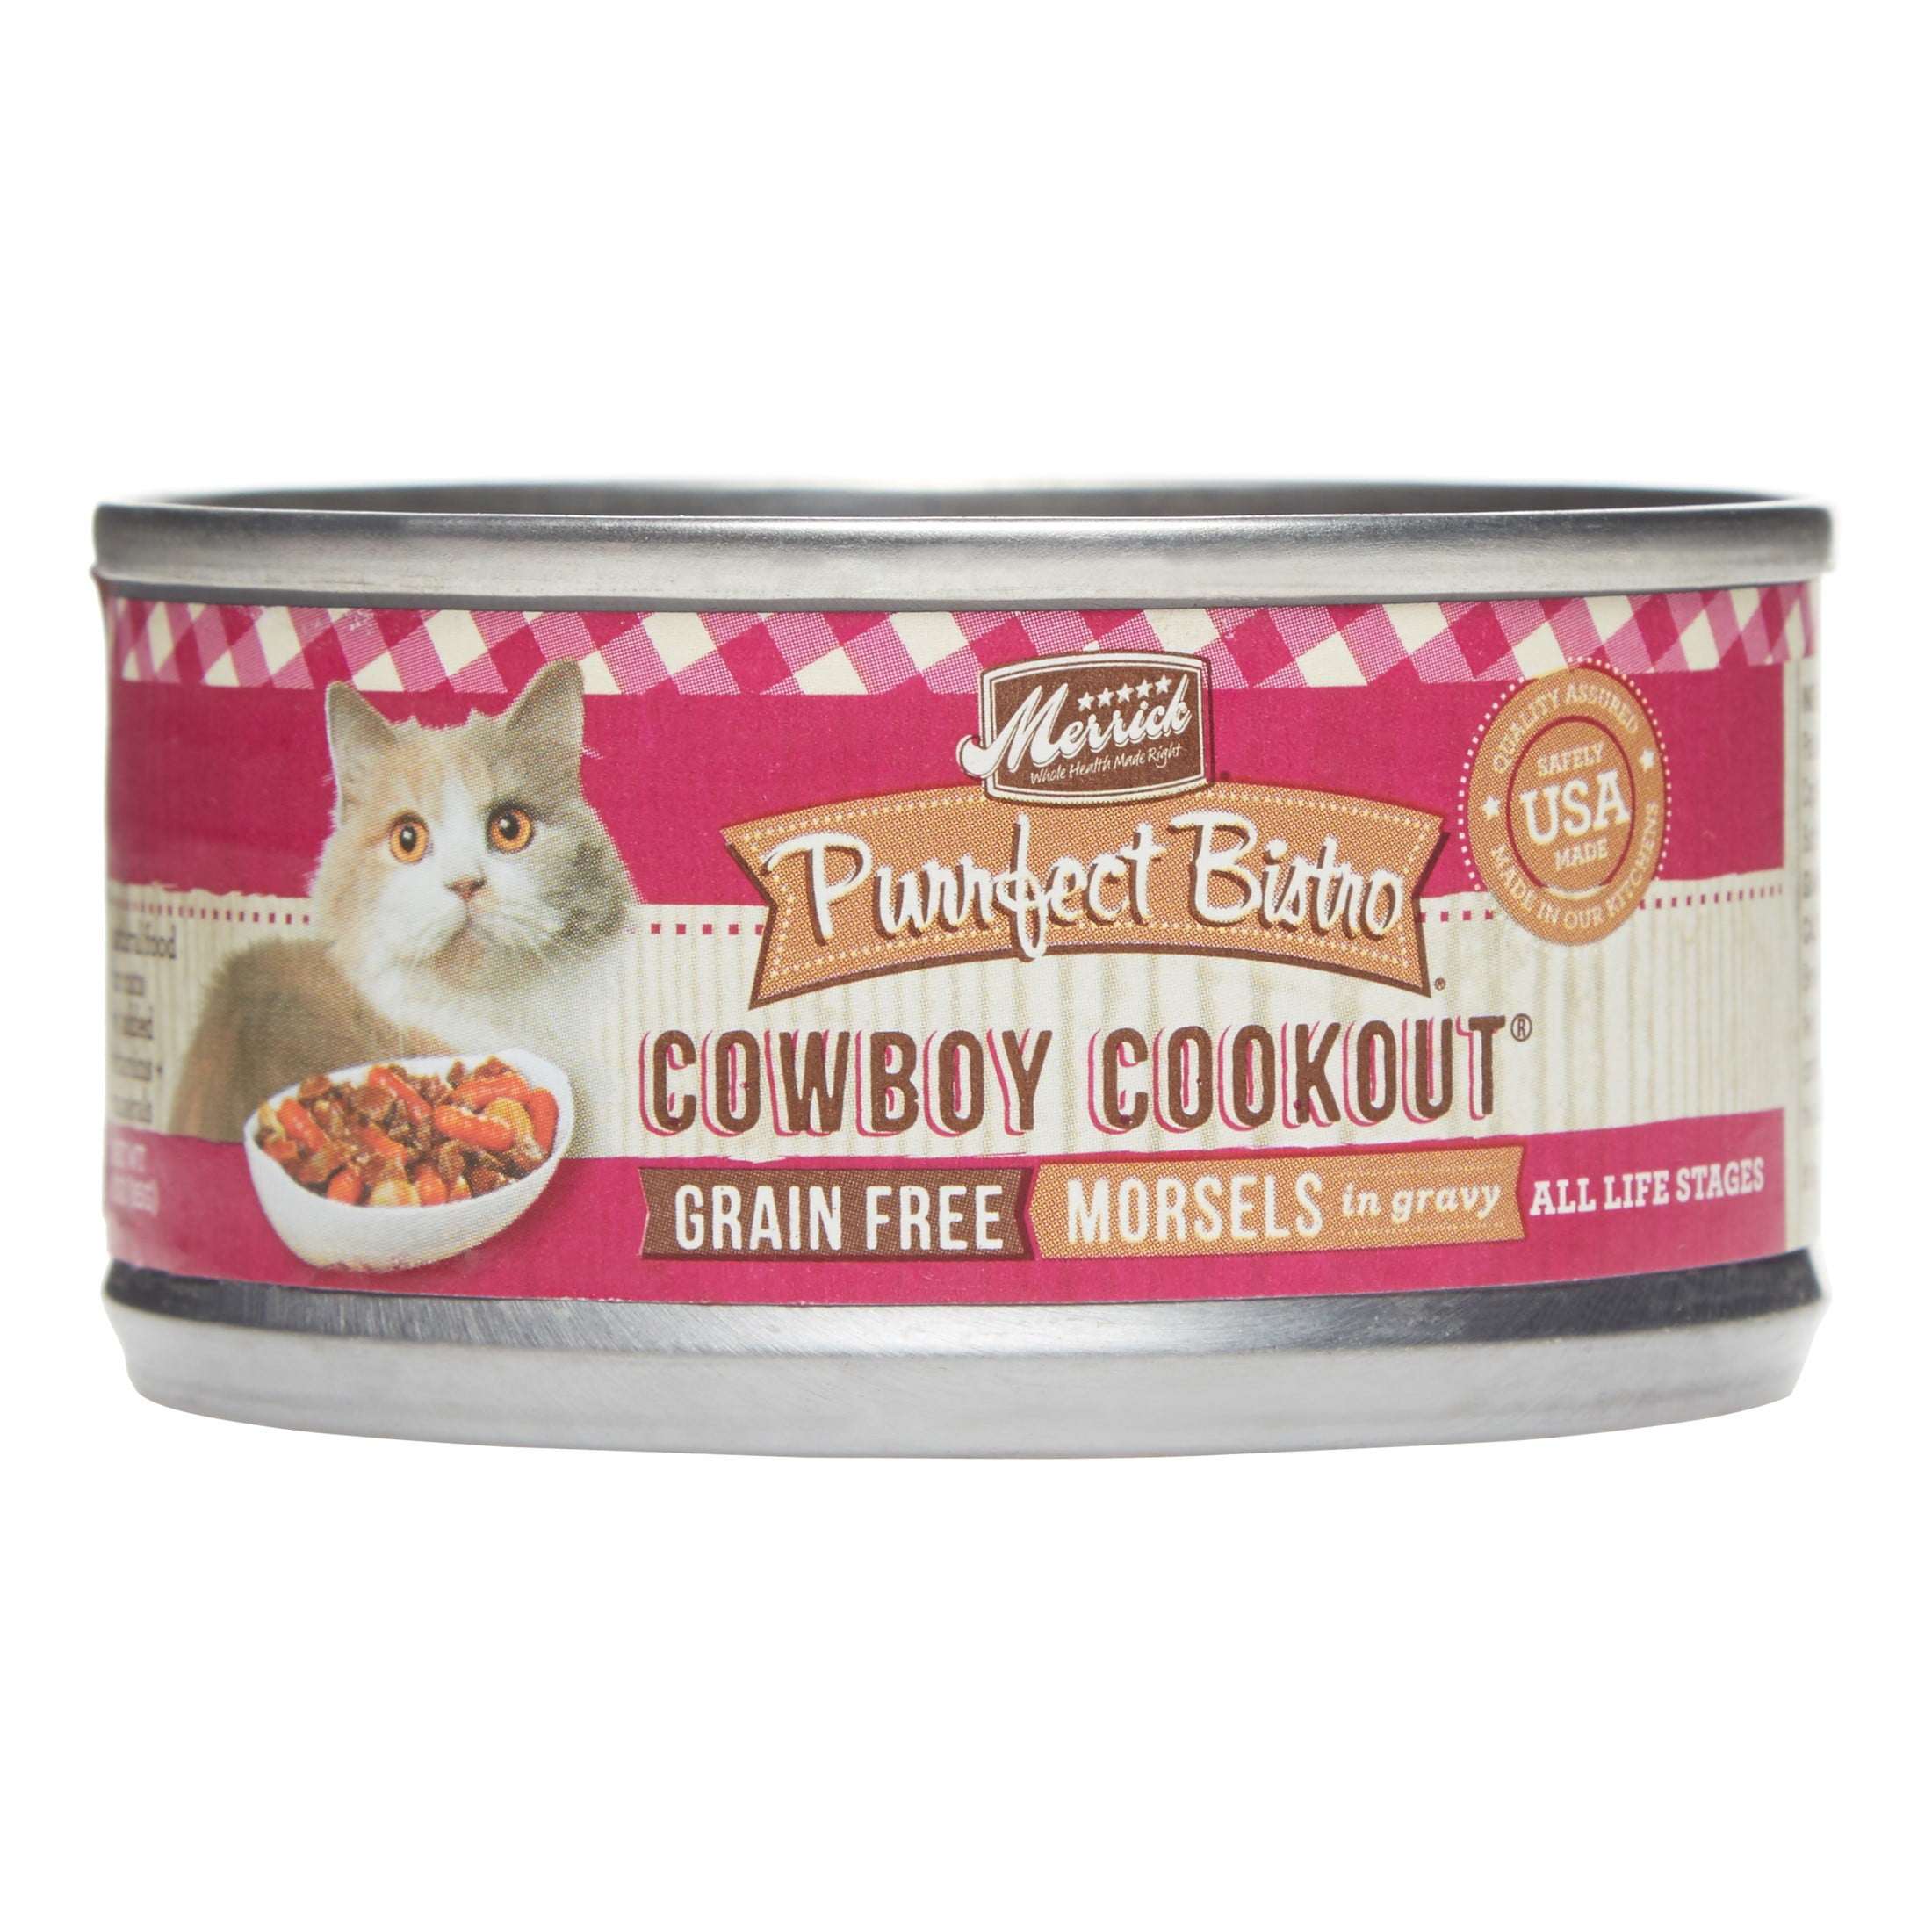 Merrick Purrfect Bistro GrainFree Cowboy Cookout Wet Cat Food, 3 oz